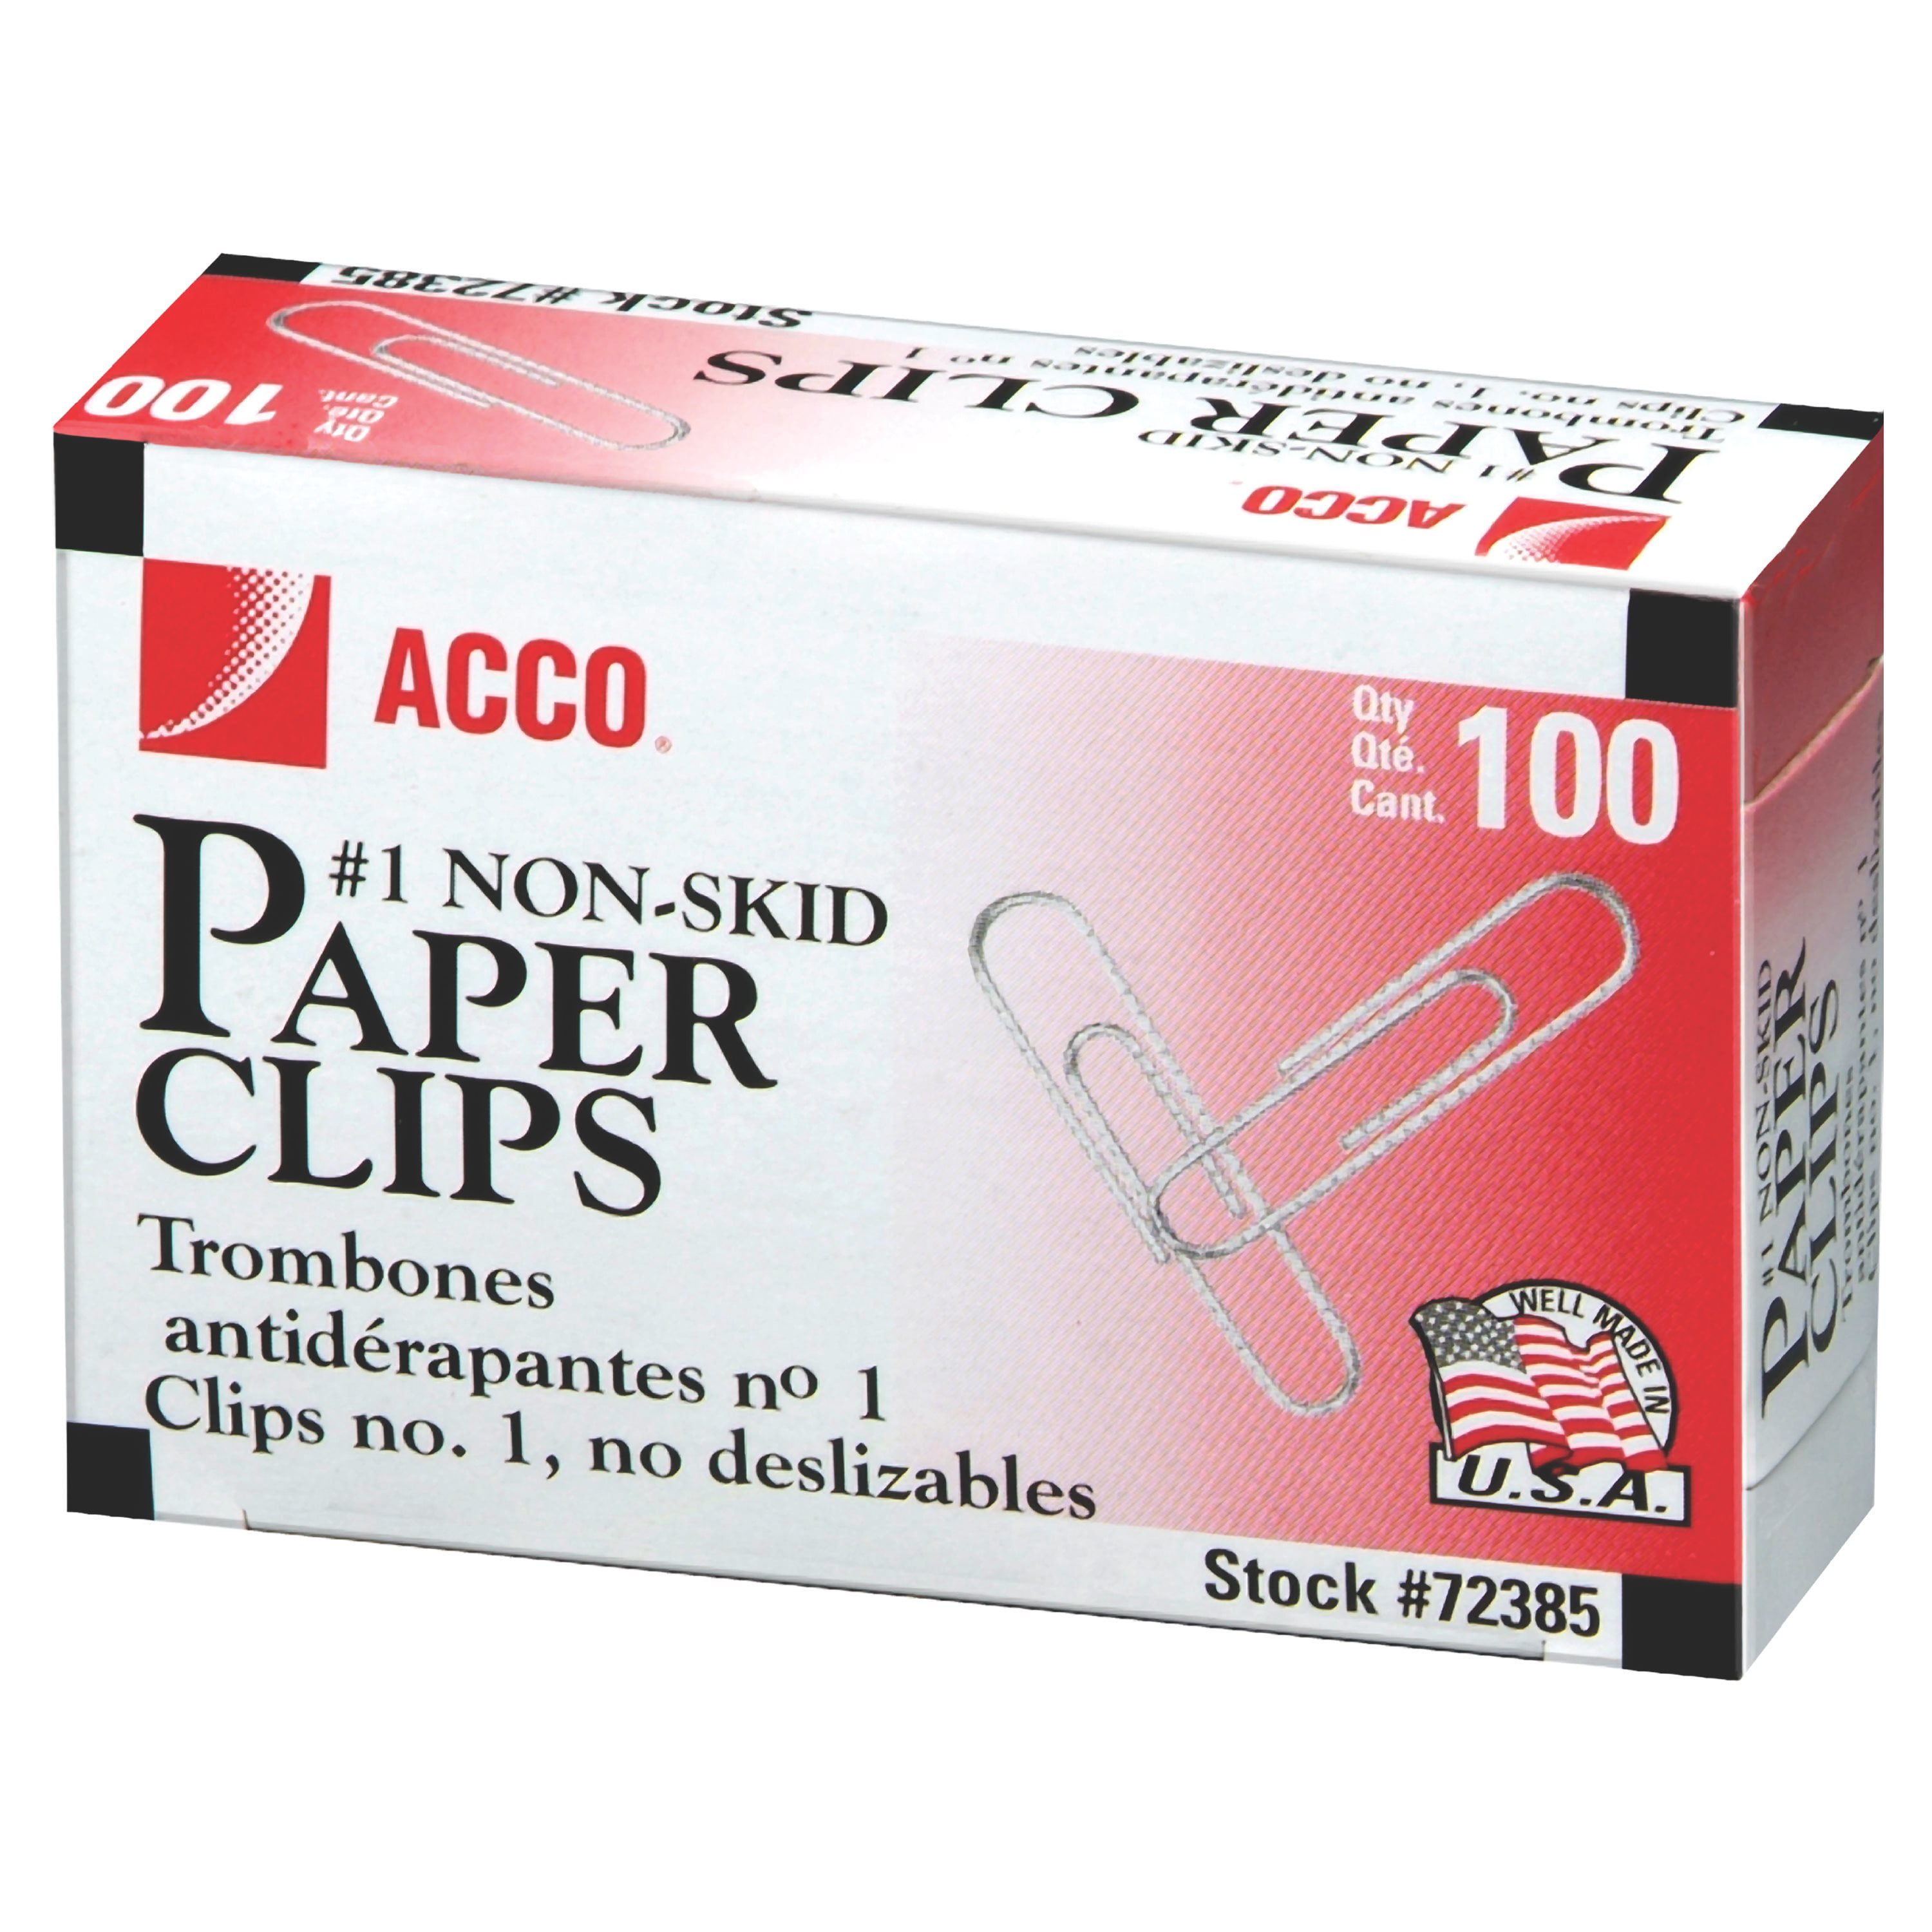 1"" Length 100/Box Silver ACC72130 Acco Regal Owl Paper Clips 